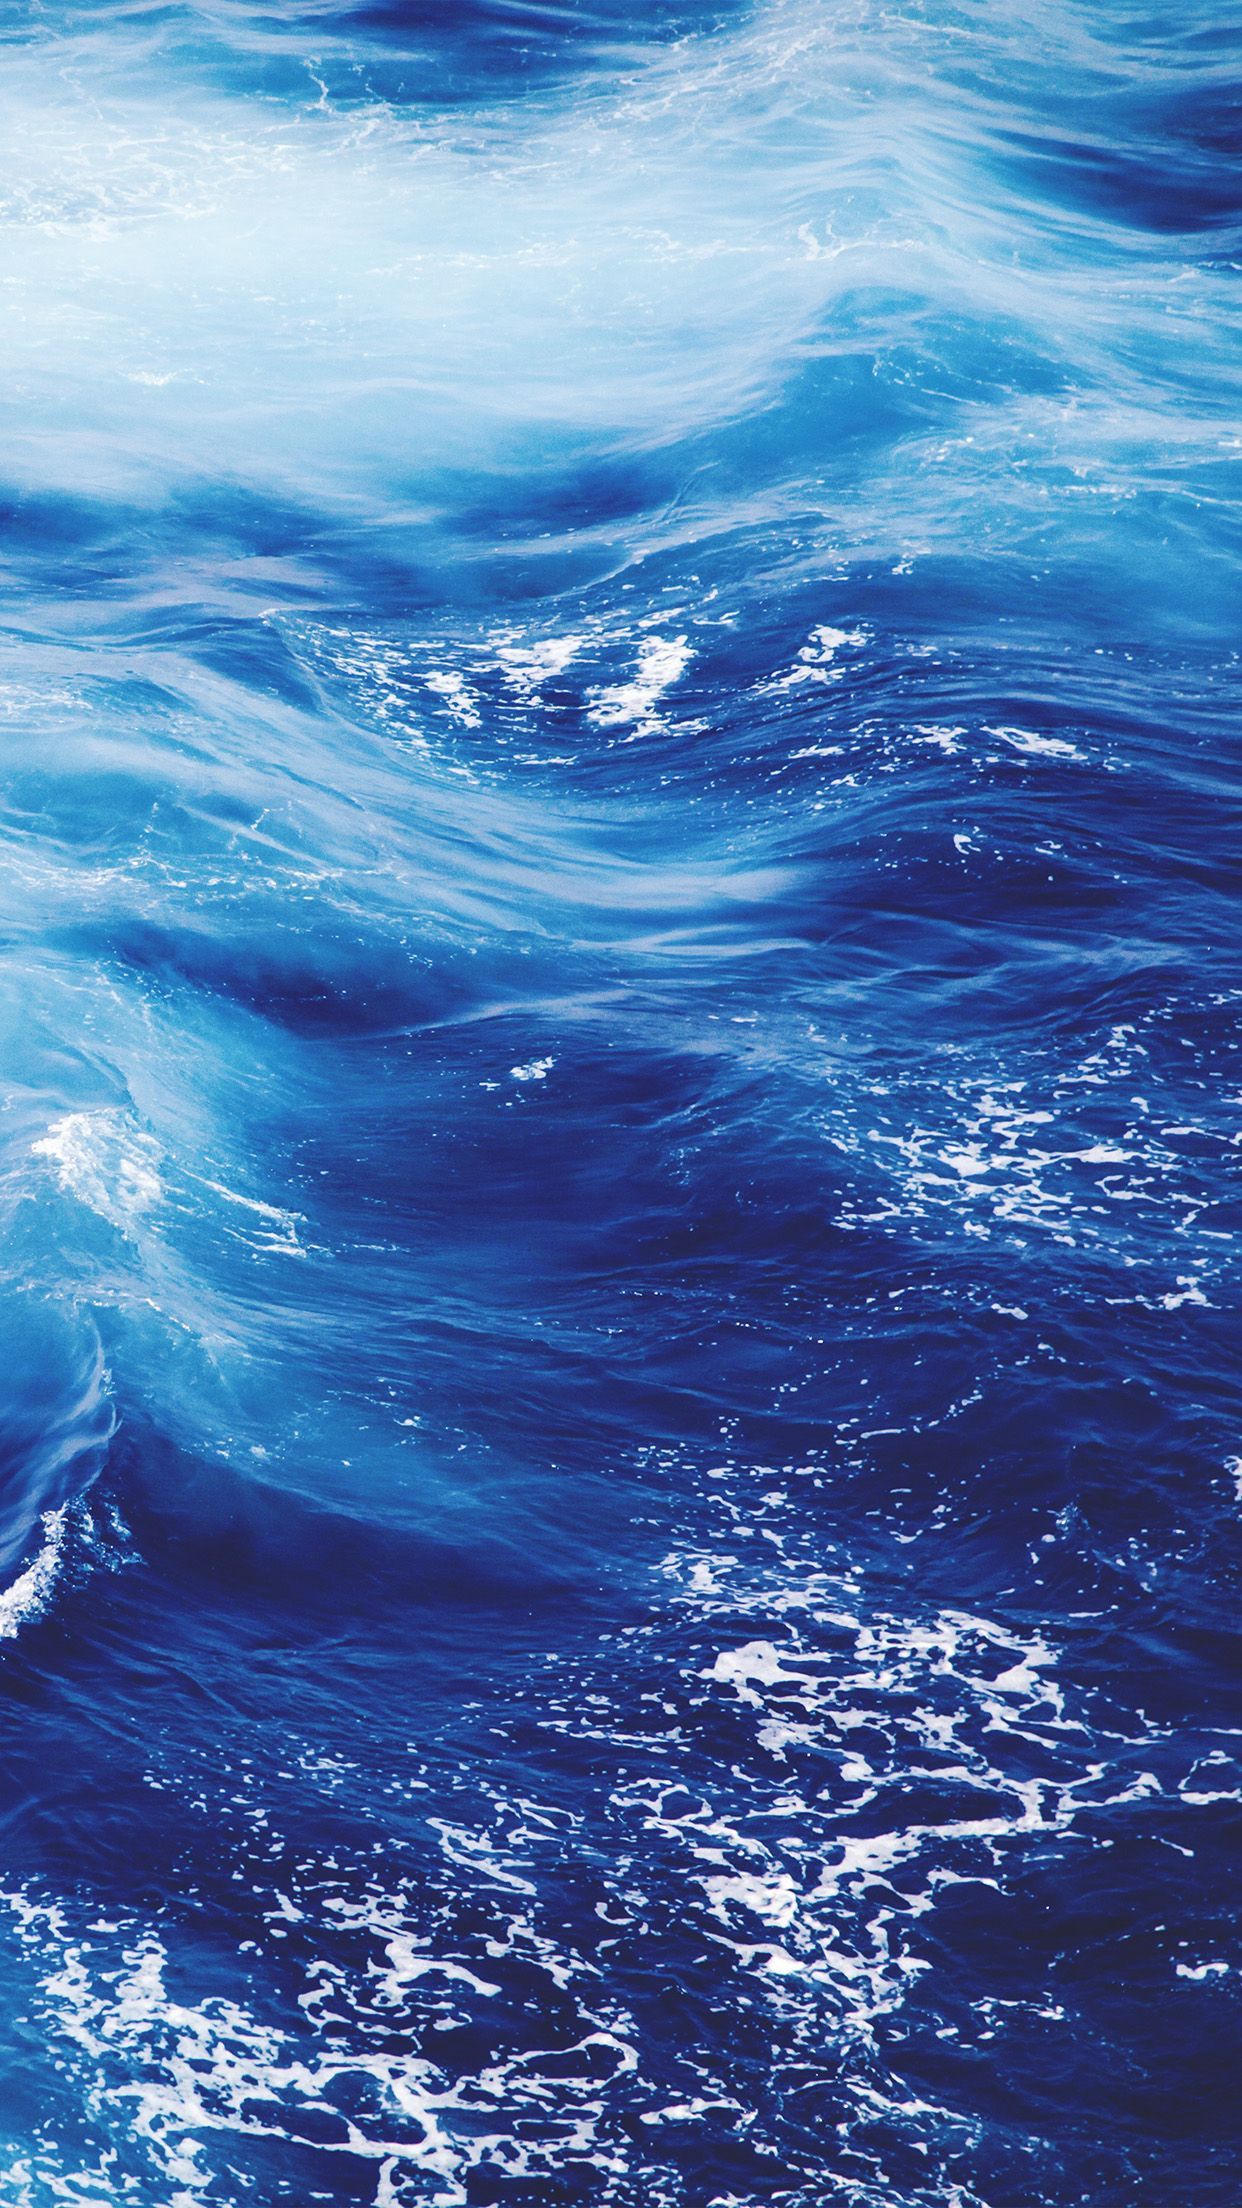 4k Ultra HD iPhone Xr Wallpaper. mywallpaper site. Nature water, Ocean photography, Sea and ocean